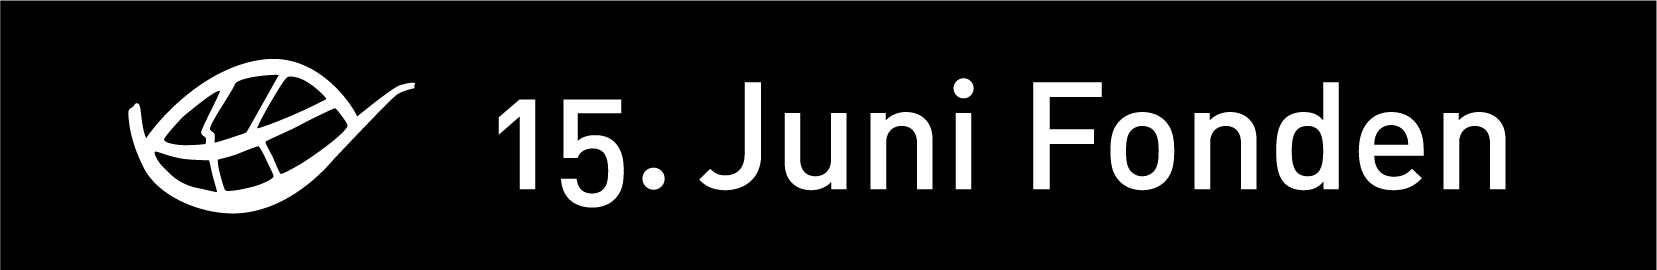 15. junifondens logo